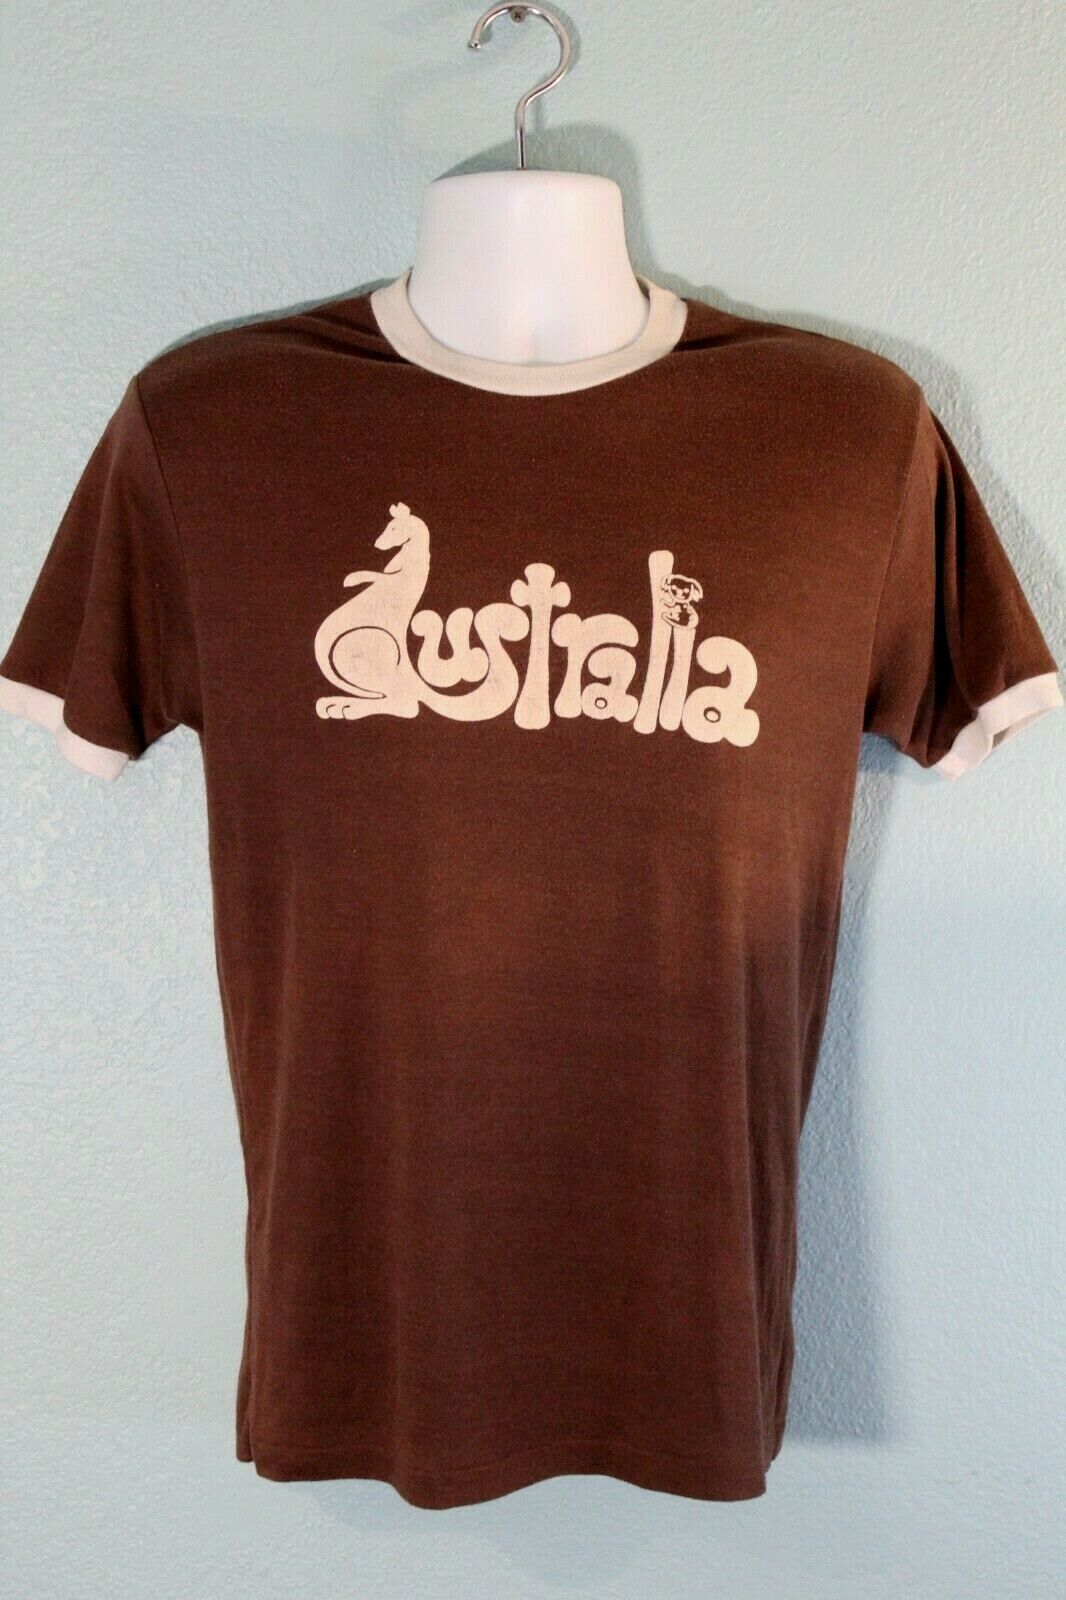 Vintage 1980s Australia Souvenir Tee Shirt Fits Like Small Koala Kangaroo Ringer